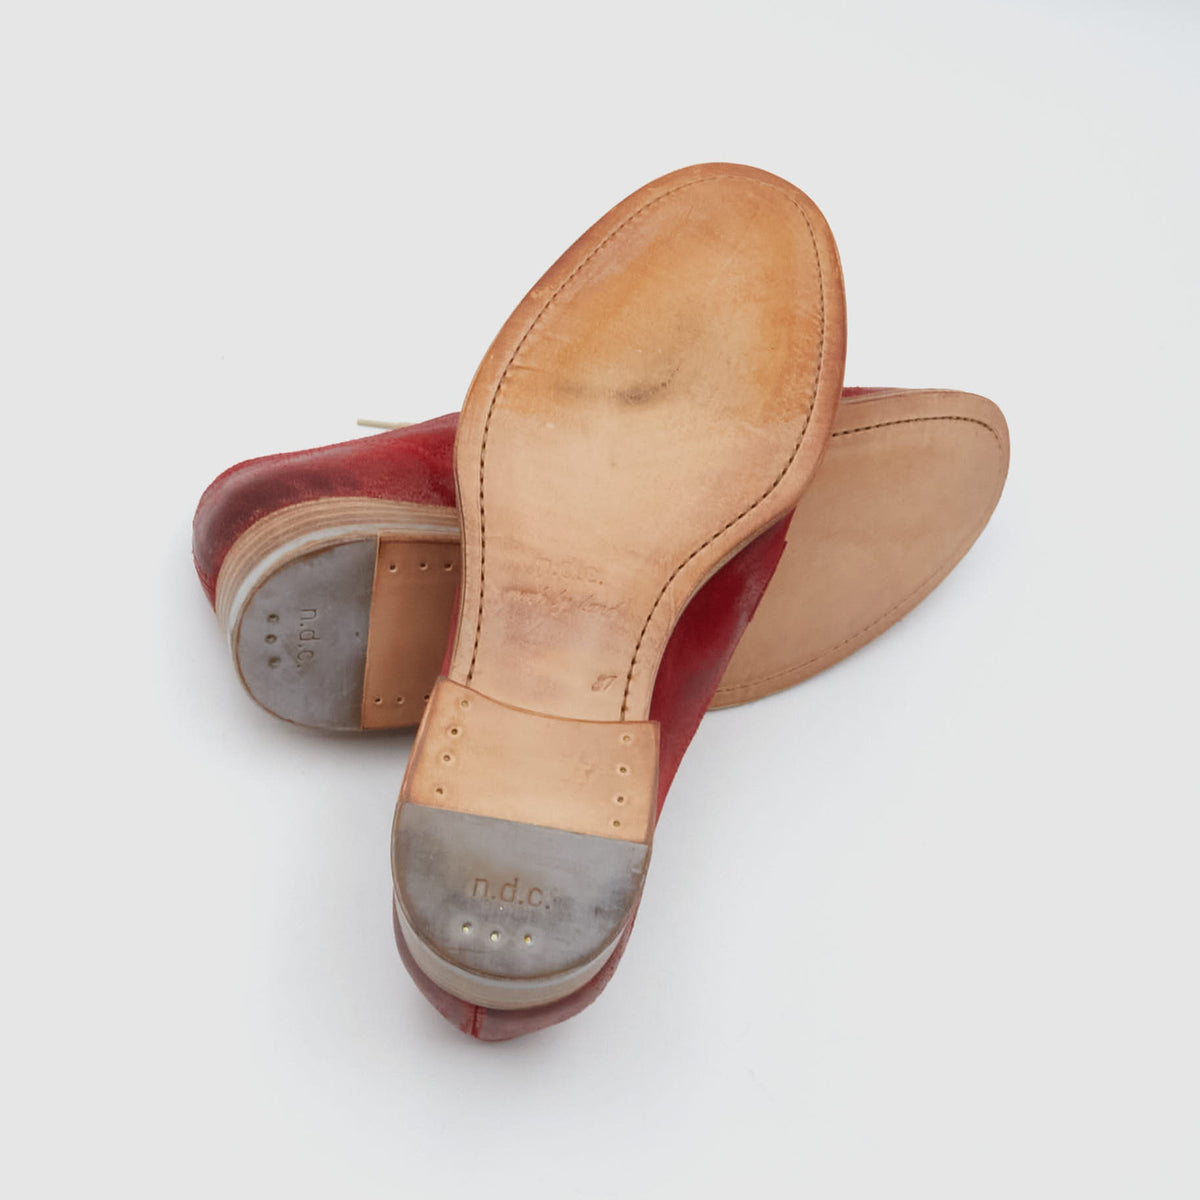 n.d.c made by hand Ladies Round Toe BlucherShoes